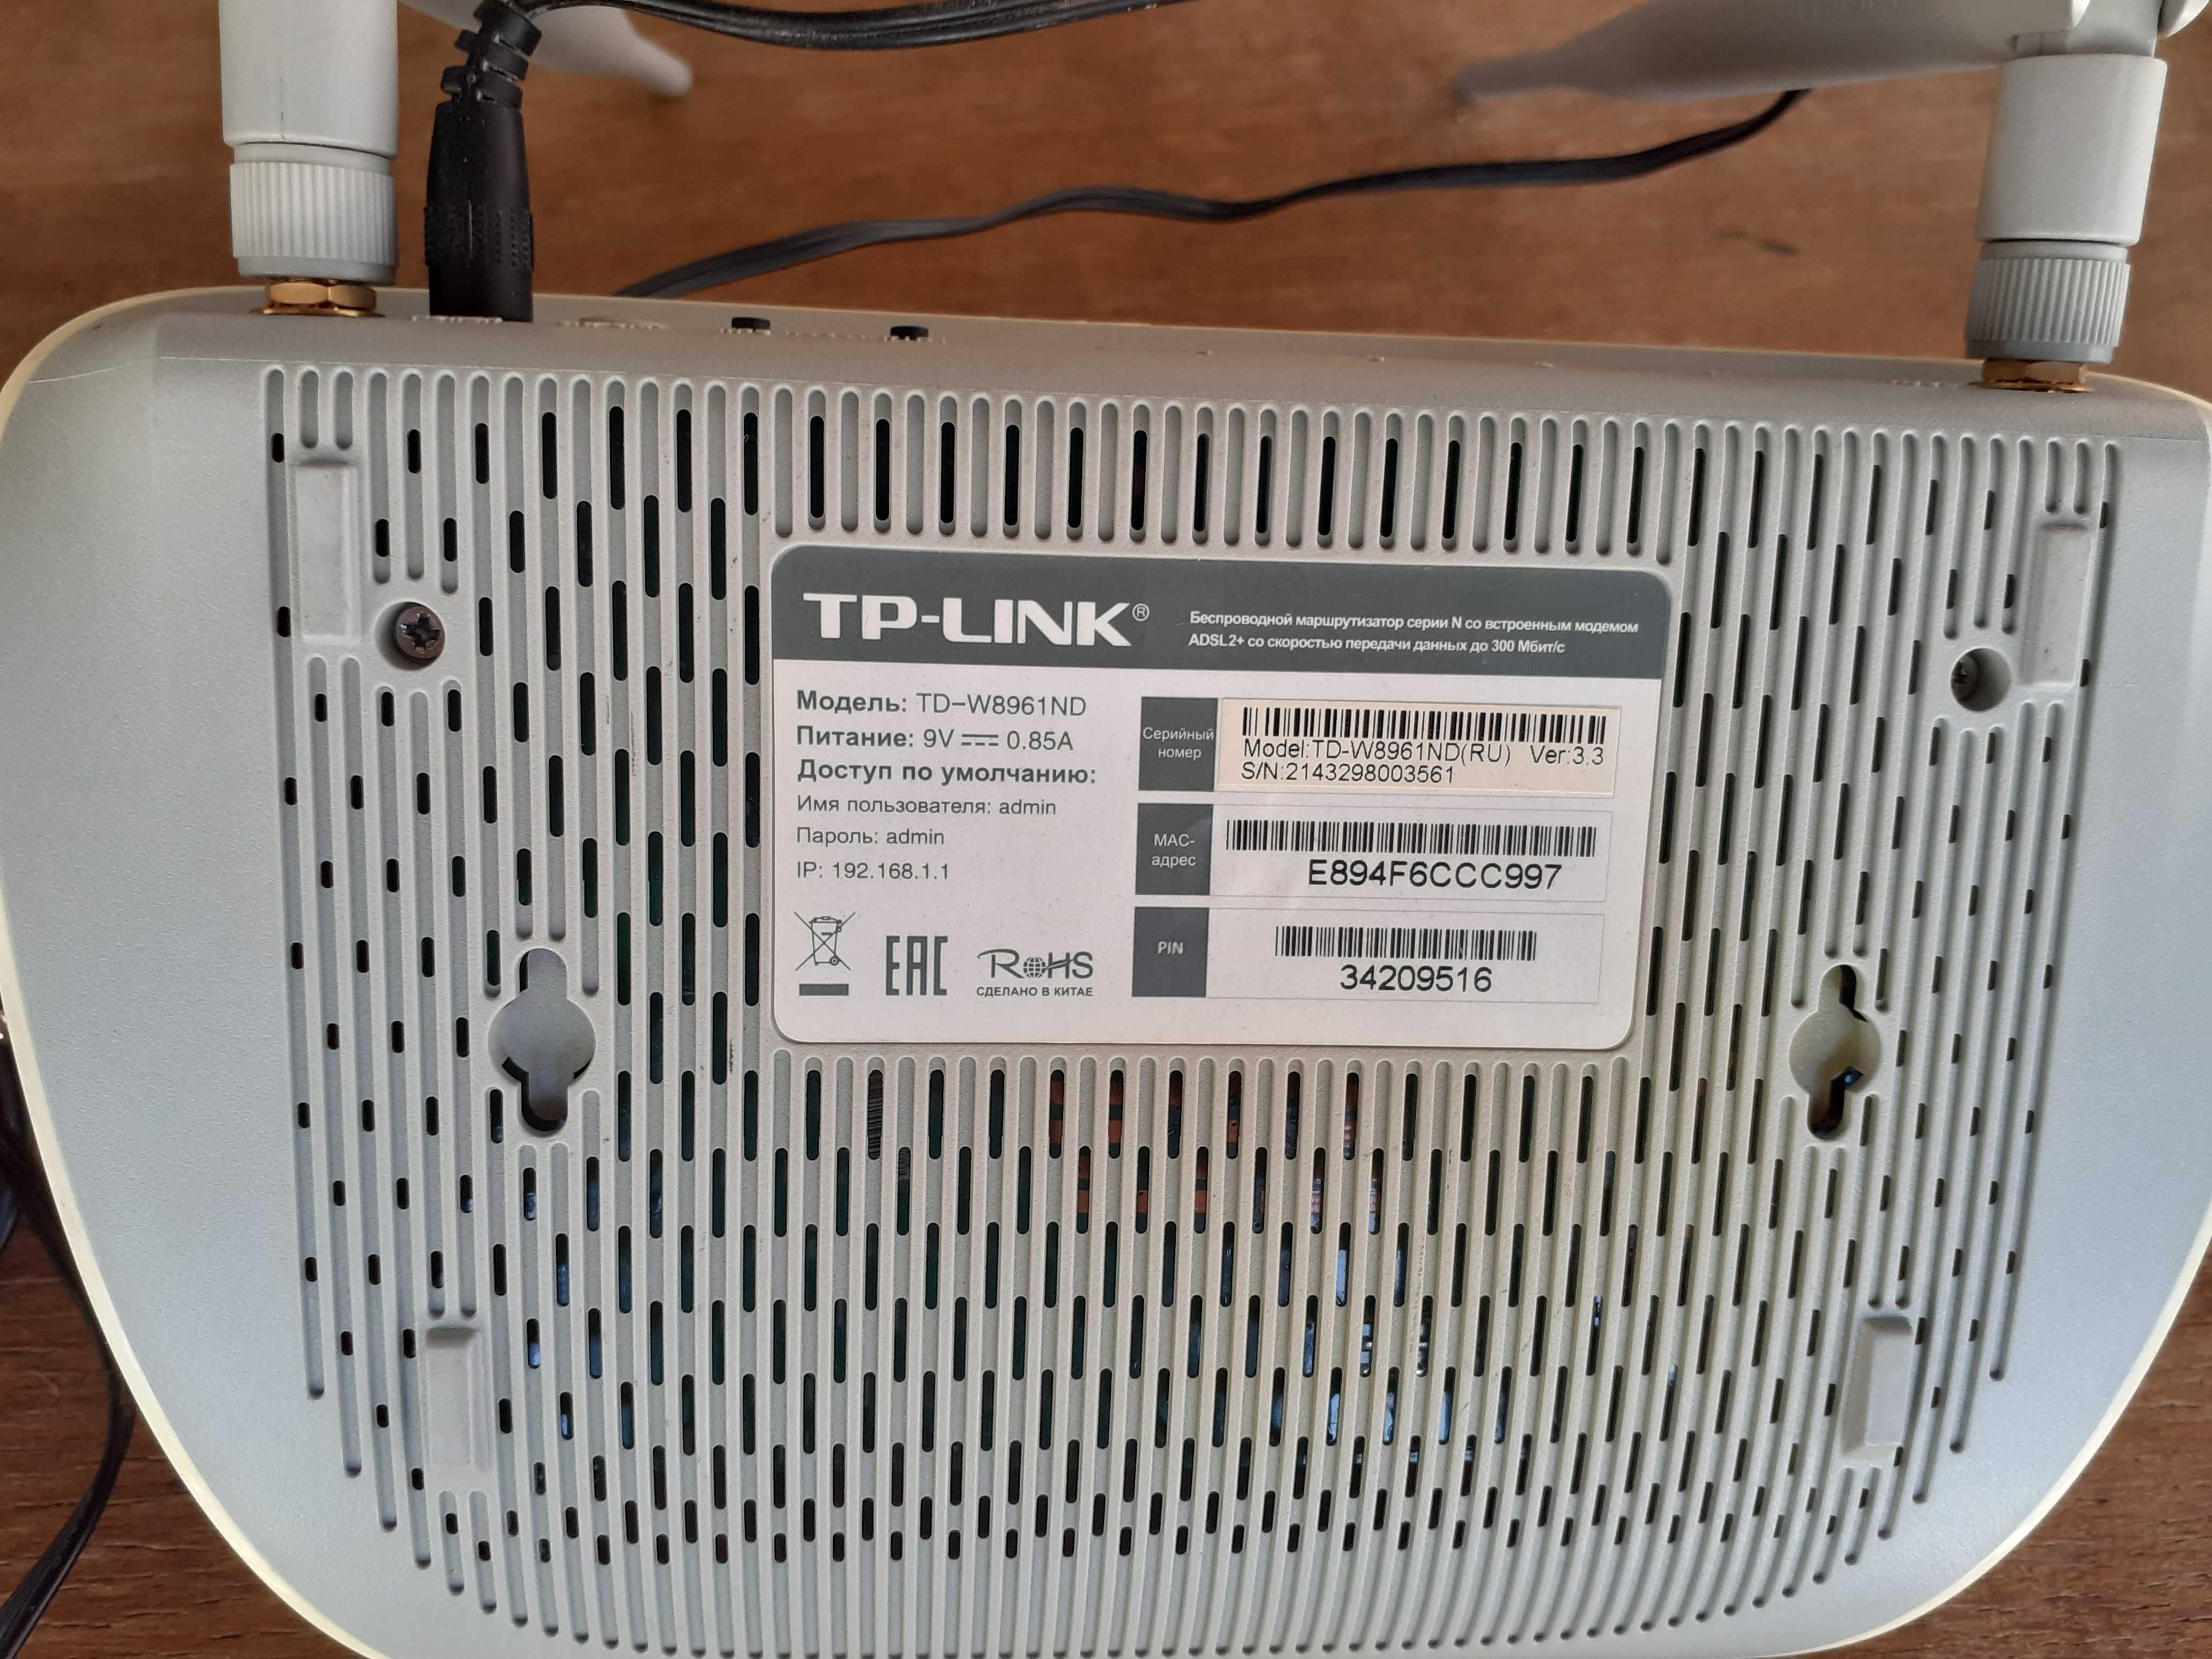 Модем TP-LINK TD-W8961N ADSL2+. Модем ZTE DSL